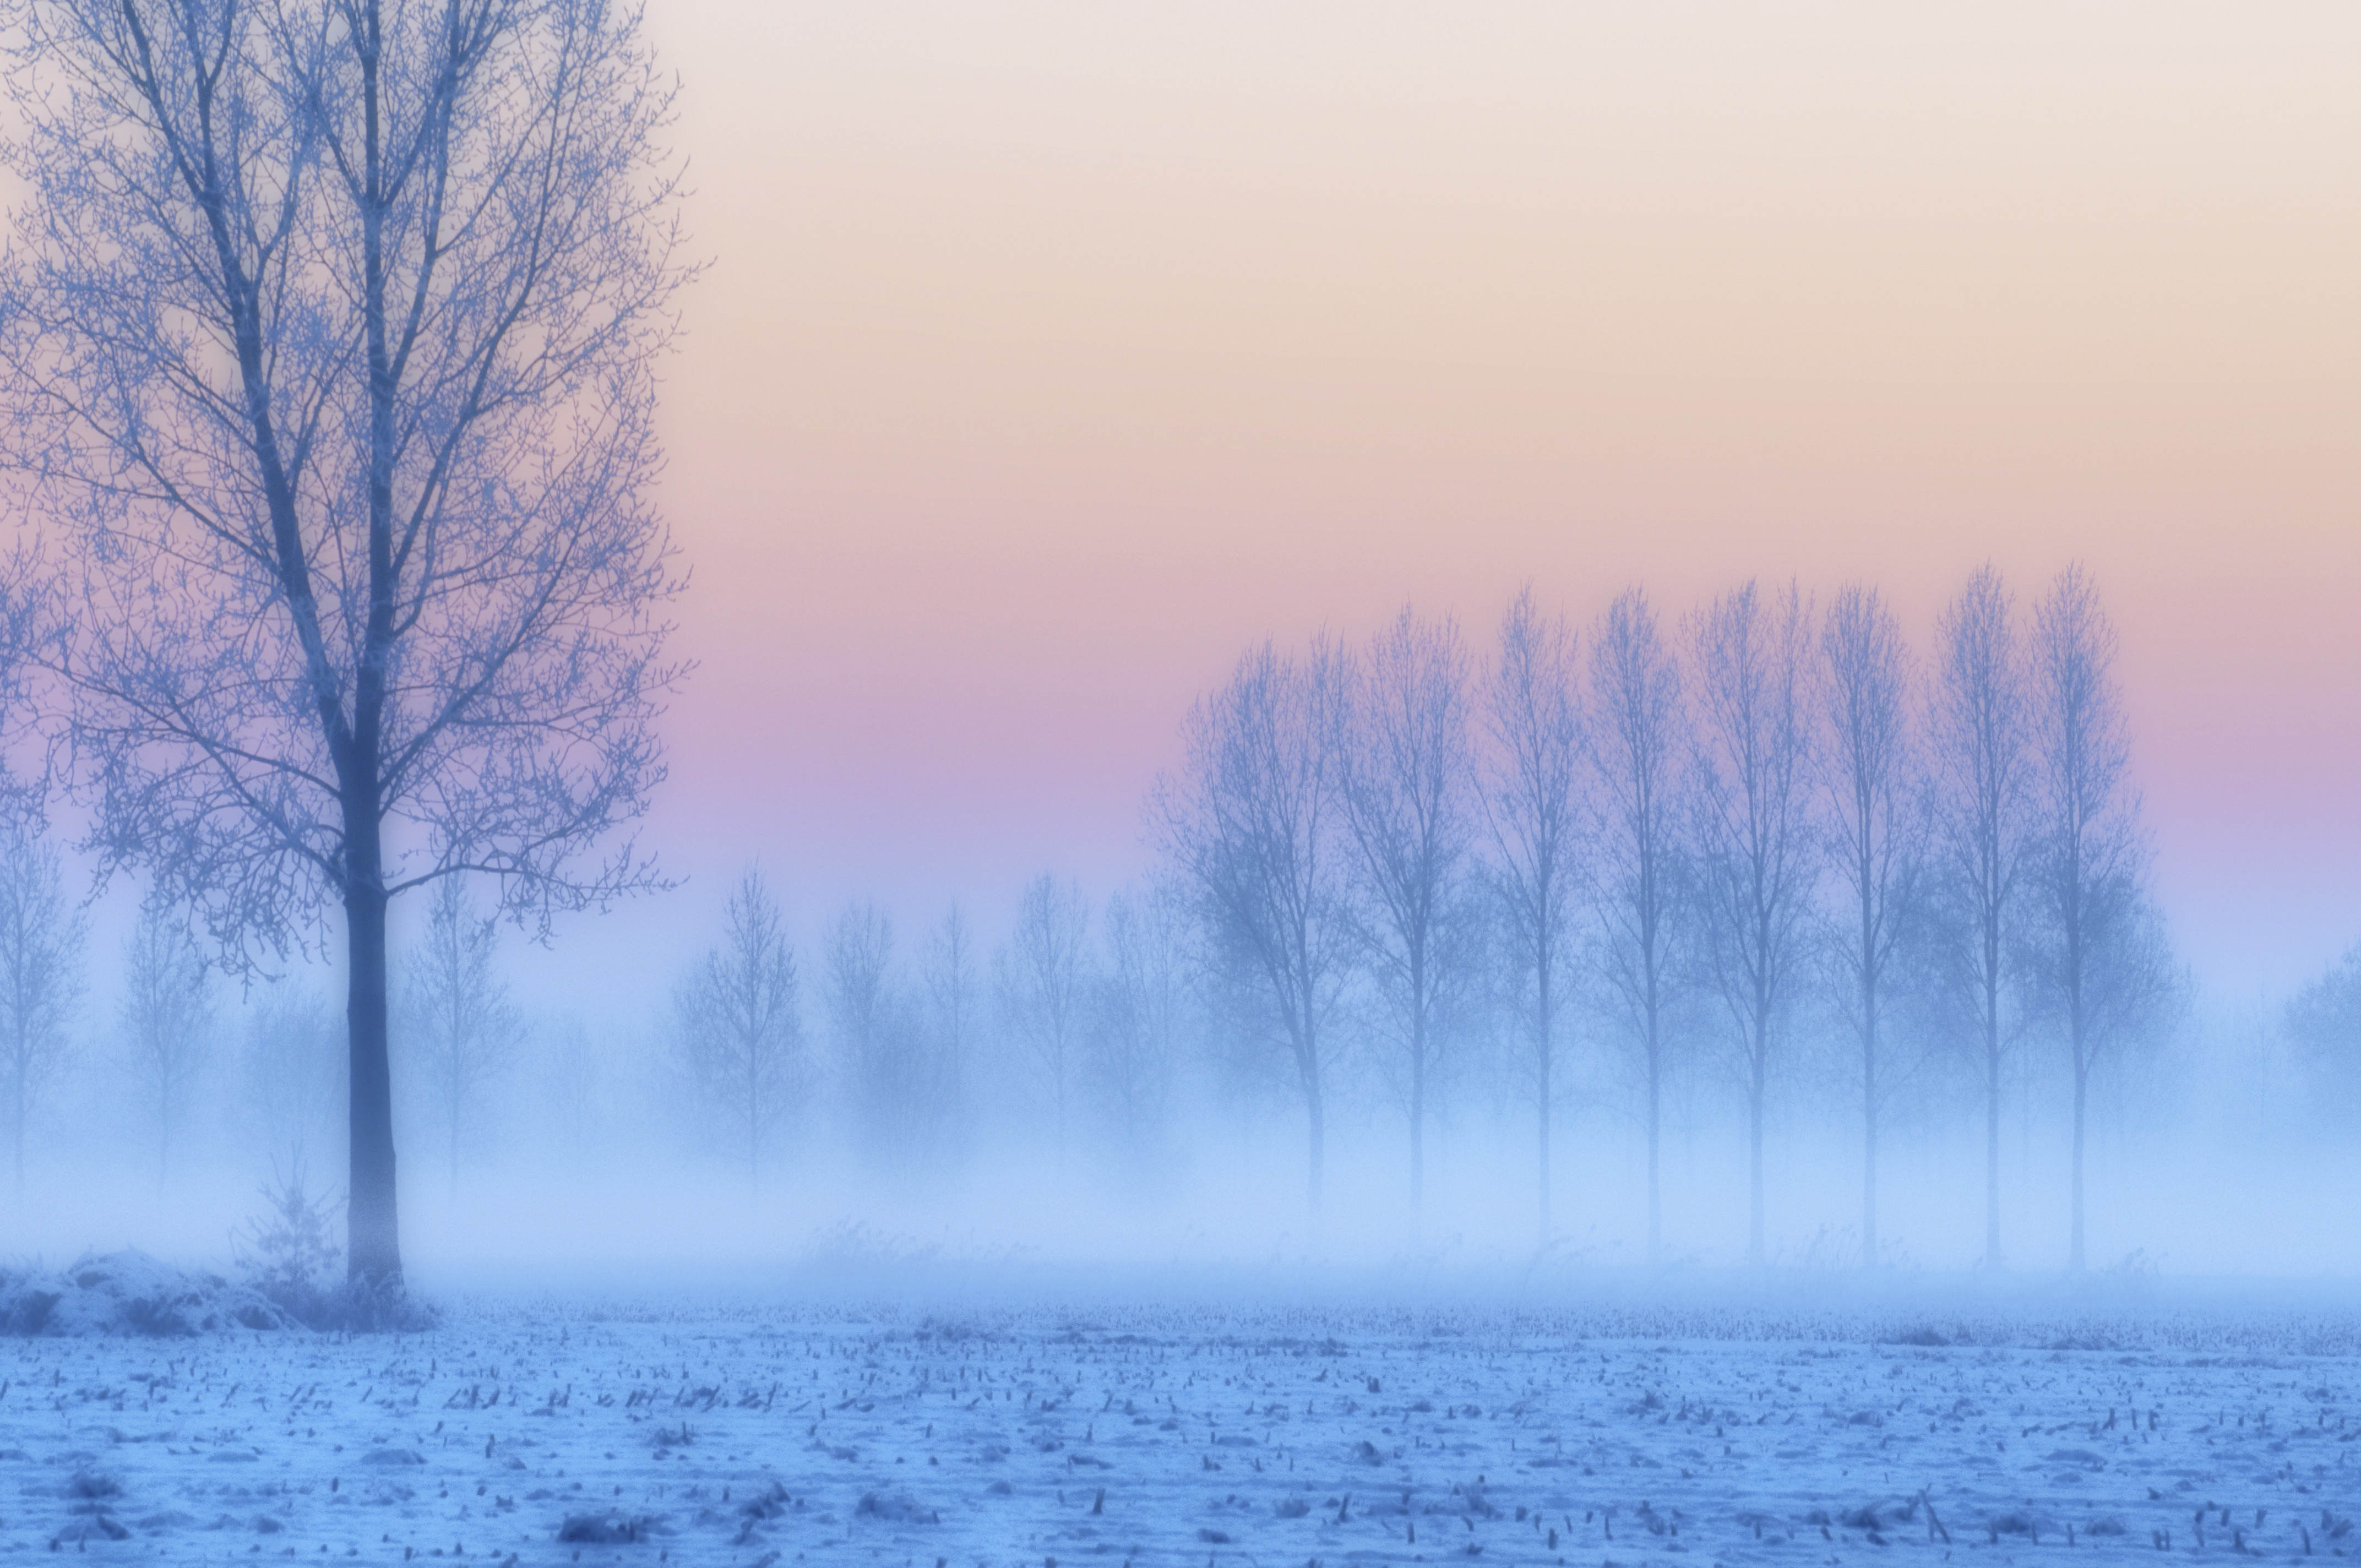 Туман стелется над полями и над синей. Зимний туман. Туманный пейзаж. Зимнее поле в тумане. Зимний пейзаж с туманом.